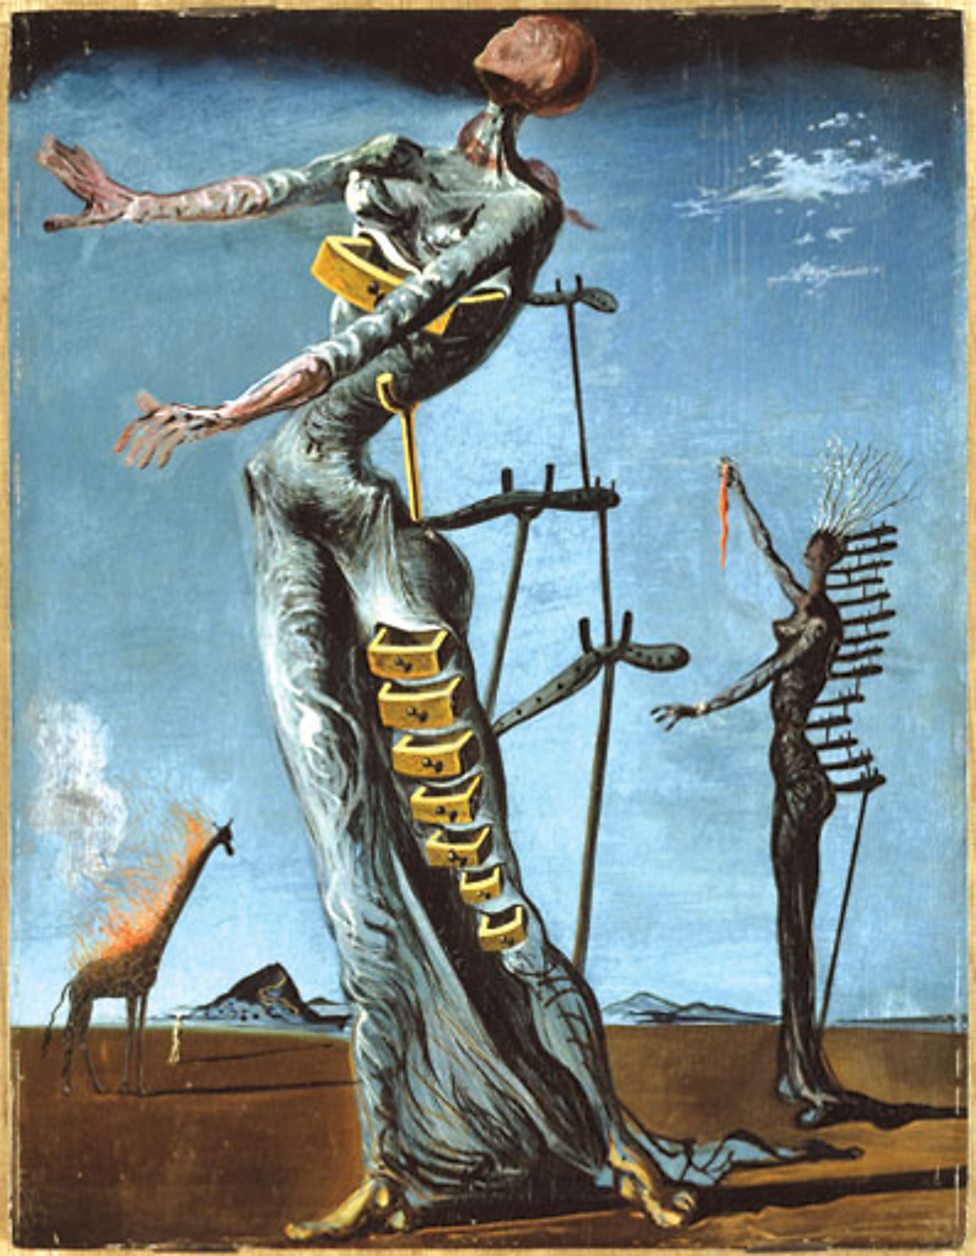 A Brief History of Surrealist Master Salvador Dalí